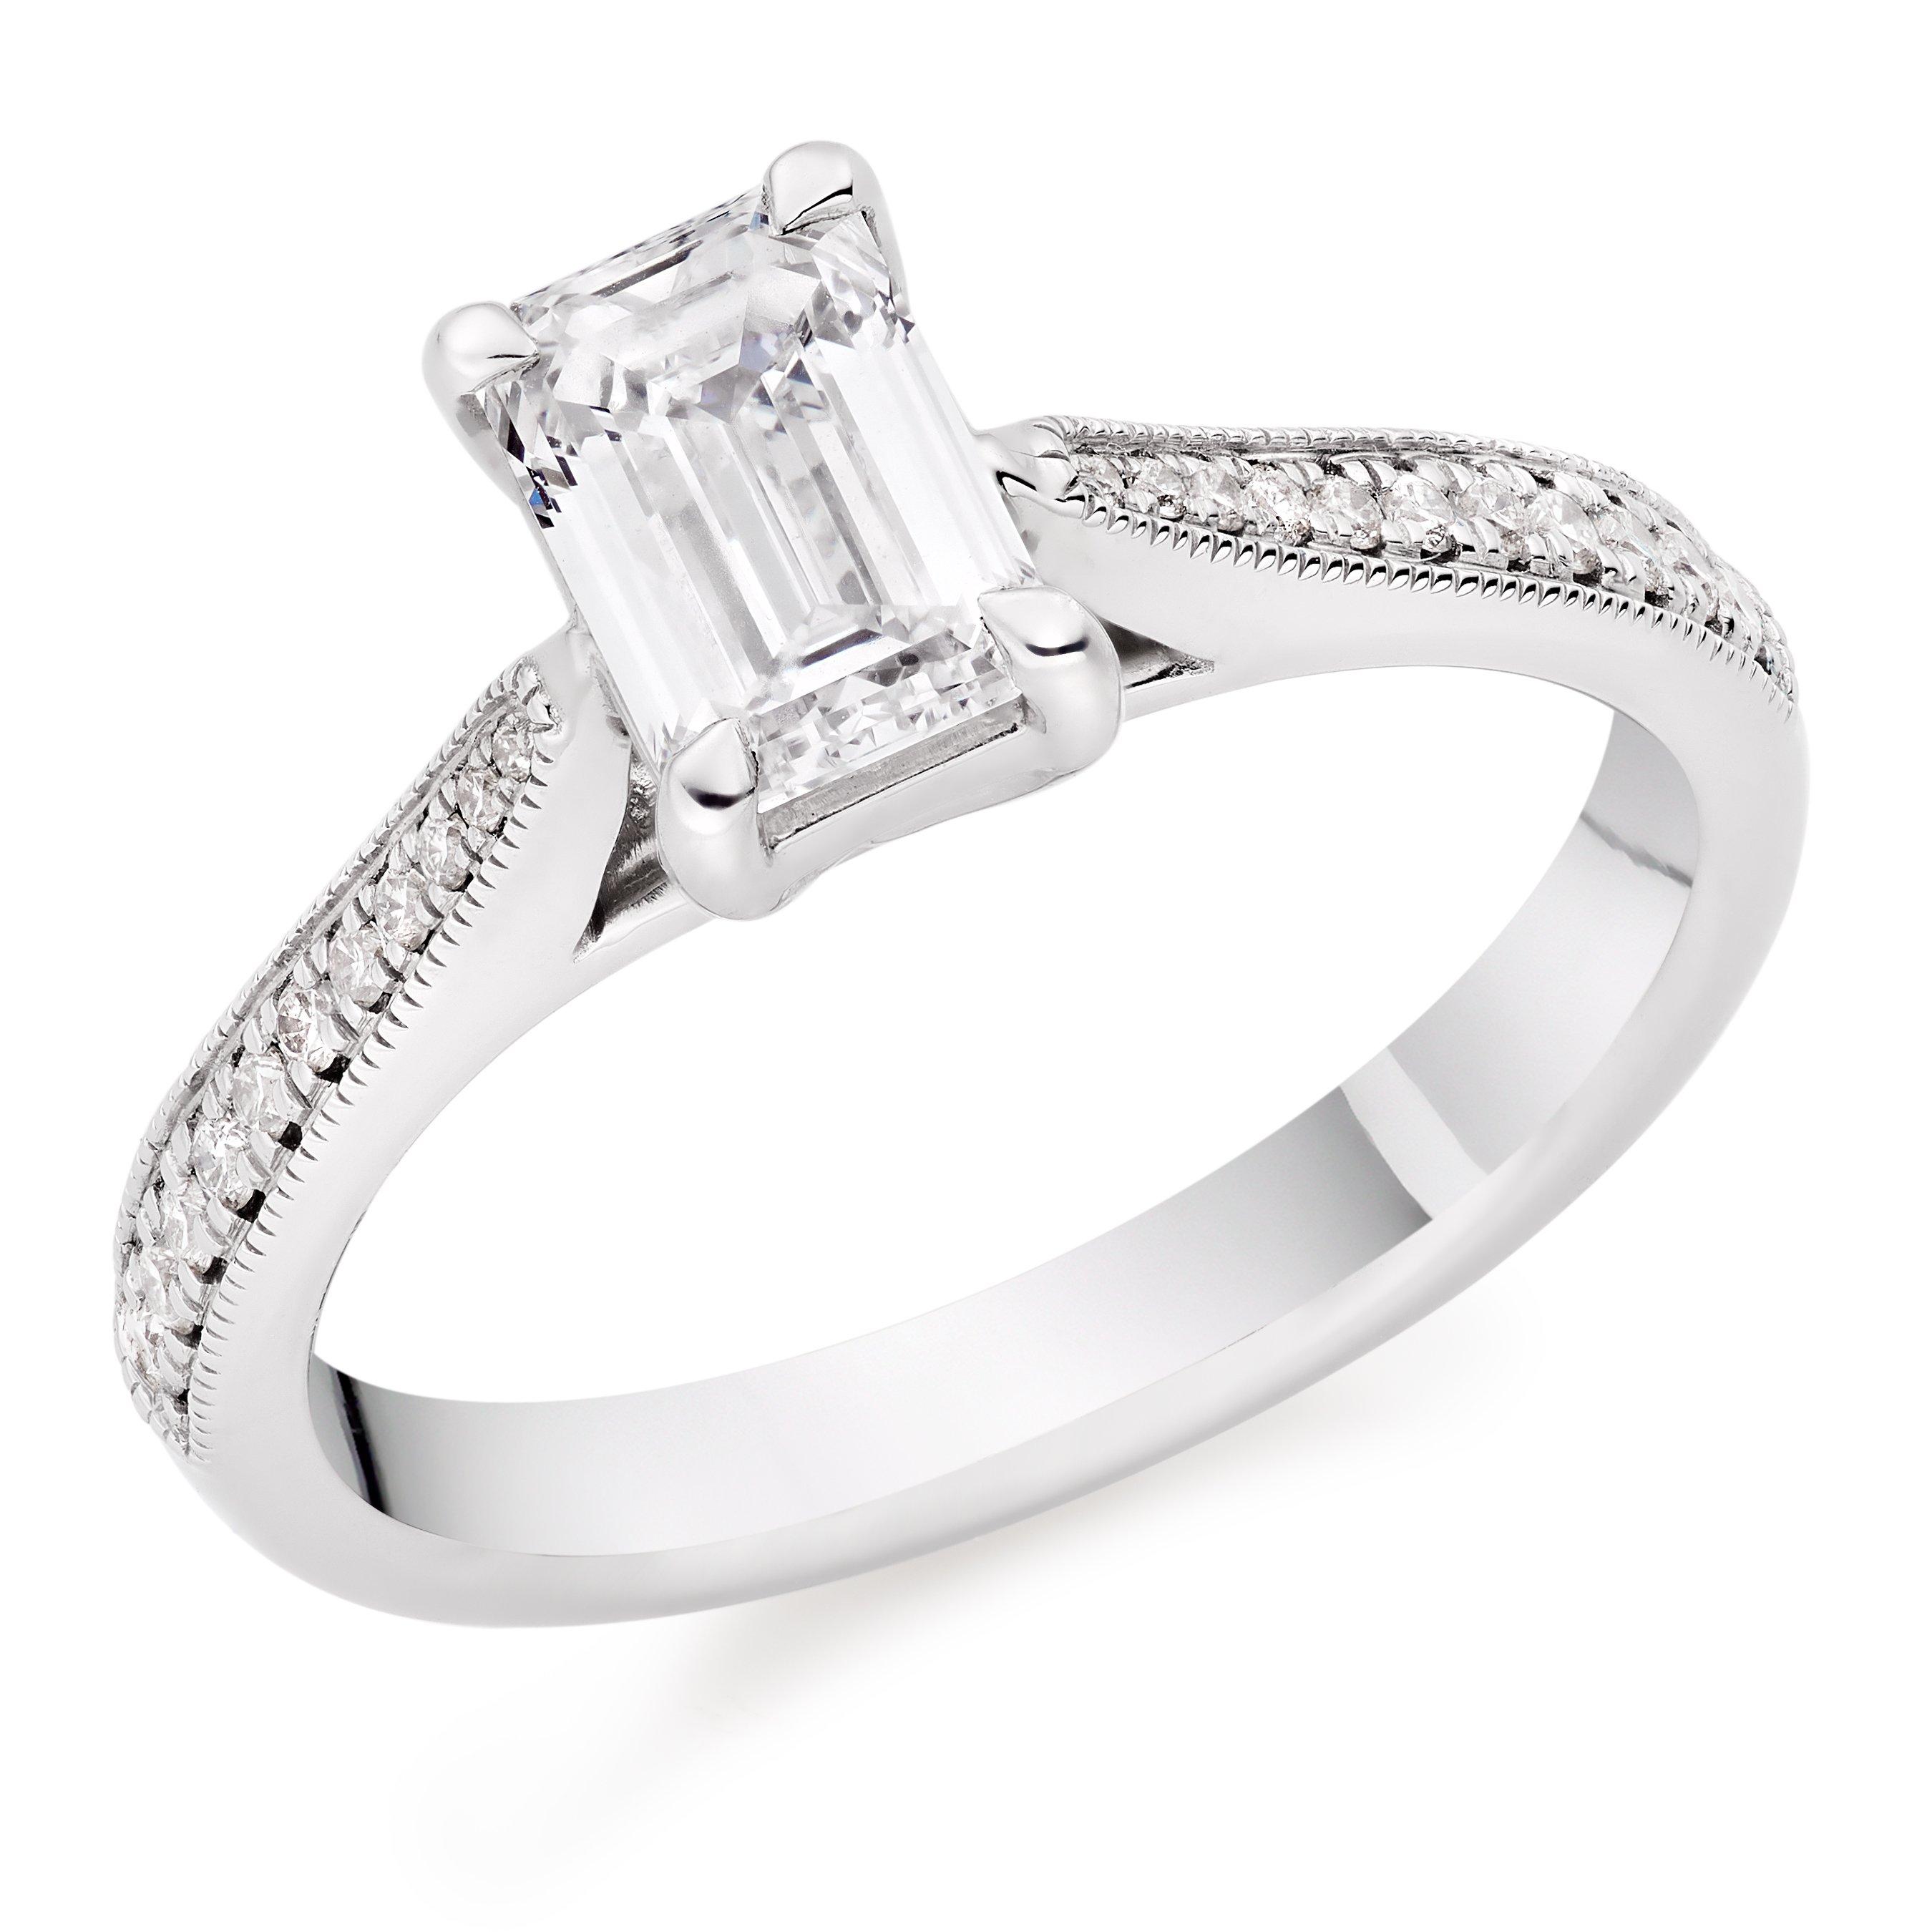 Once Platinum Emerald Cut Diamond Ring | 0130372 | Beaverbrooks the ...